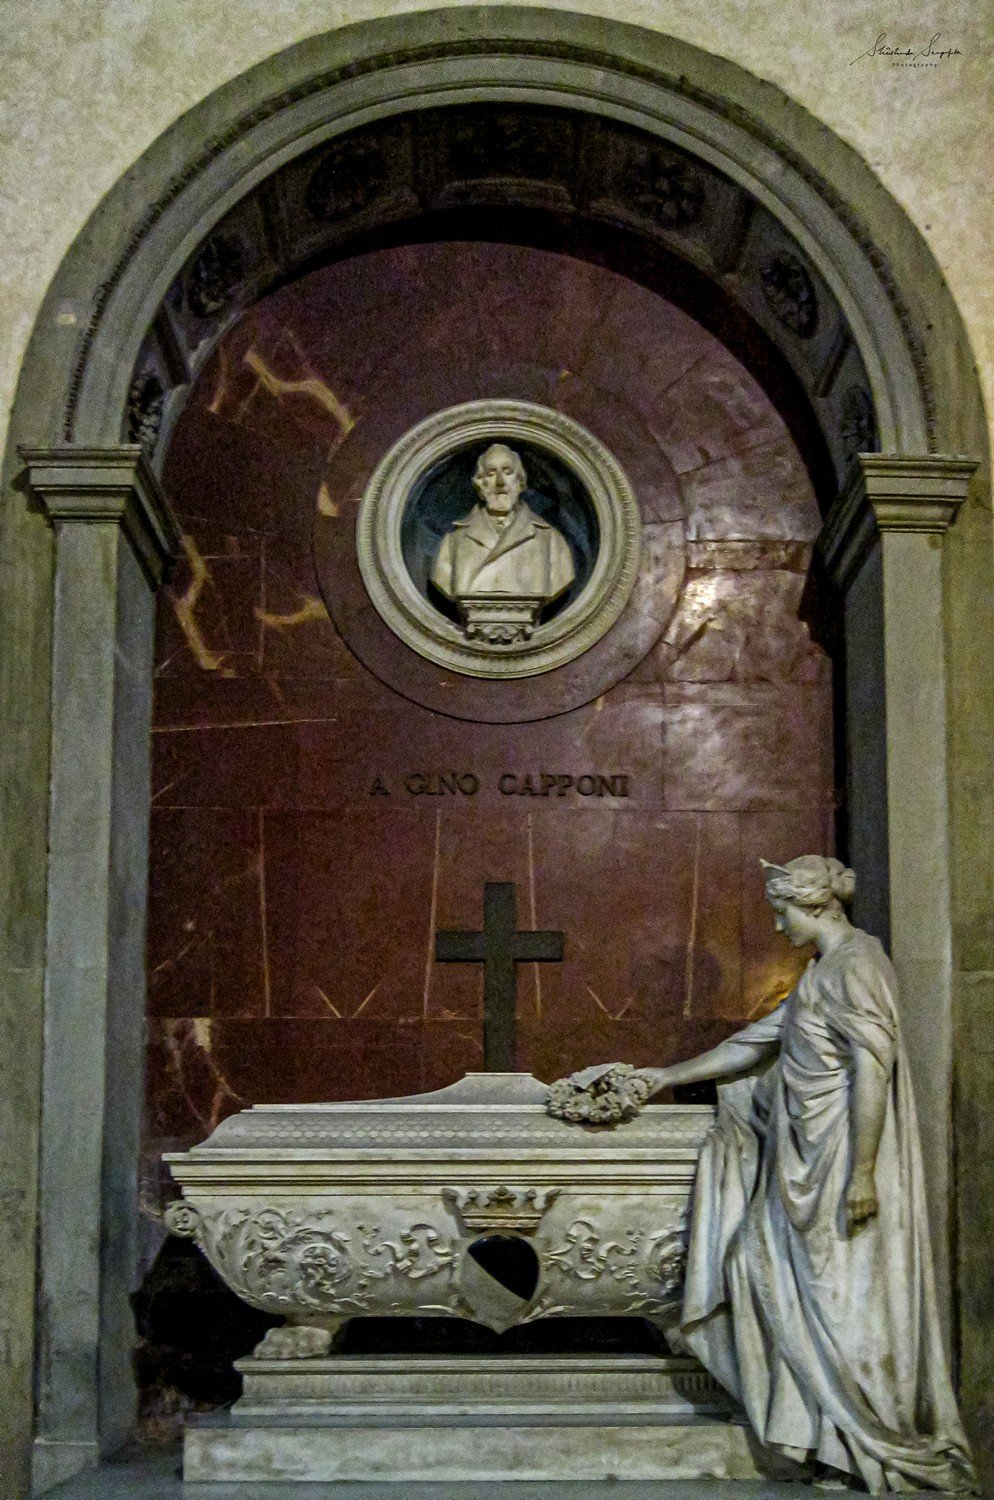 Tomb of Gino Capponi at basilica di santa croce church in florence tuscany italy shot in summer